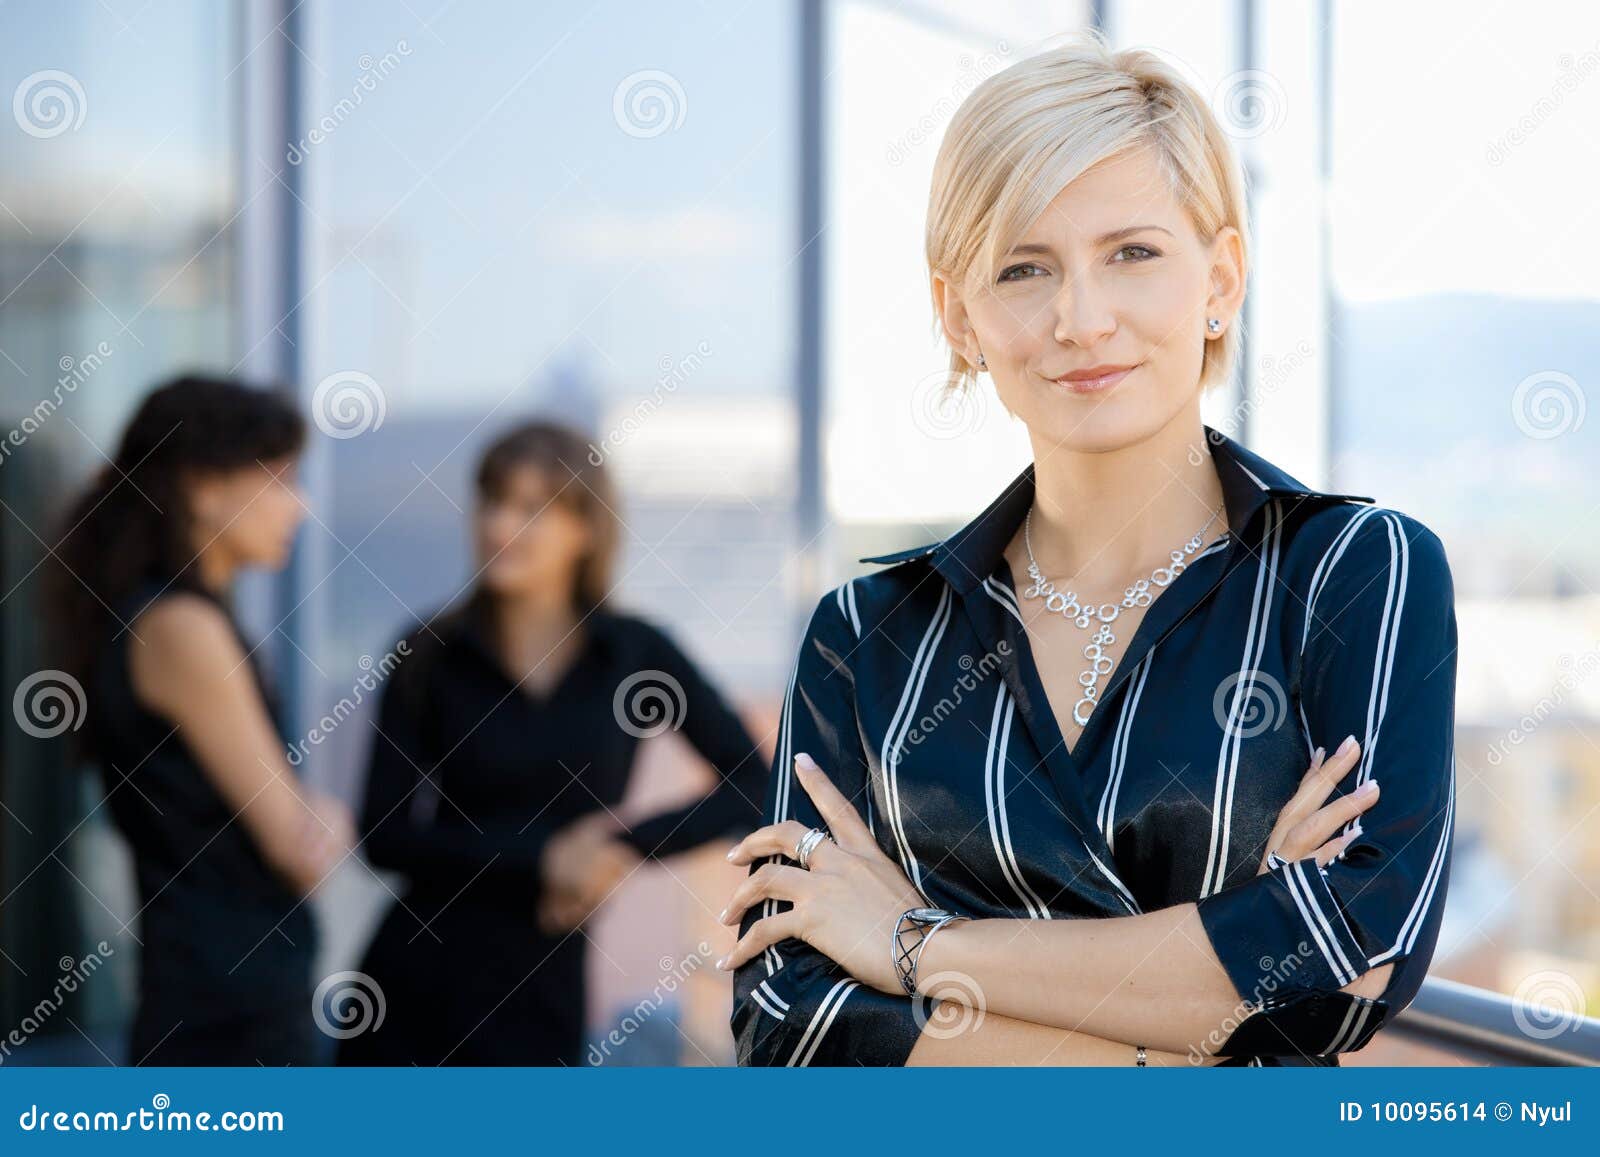 portrait of businesswoman